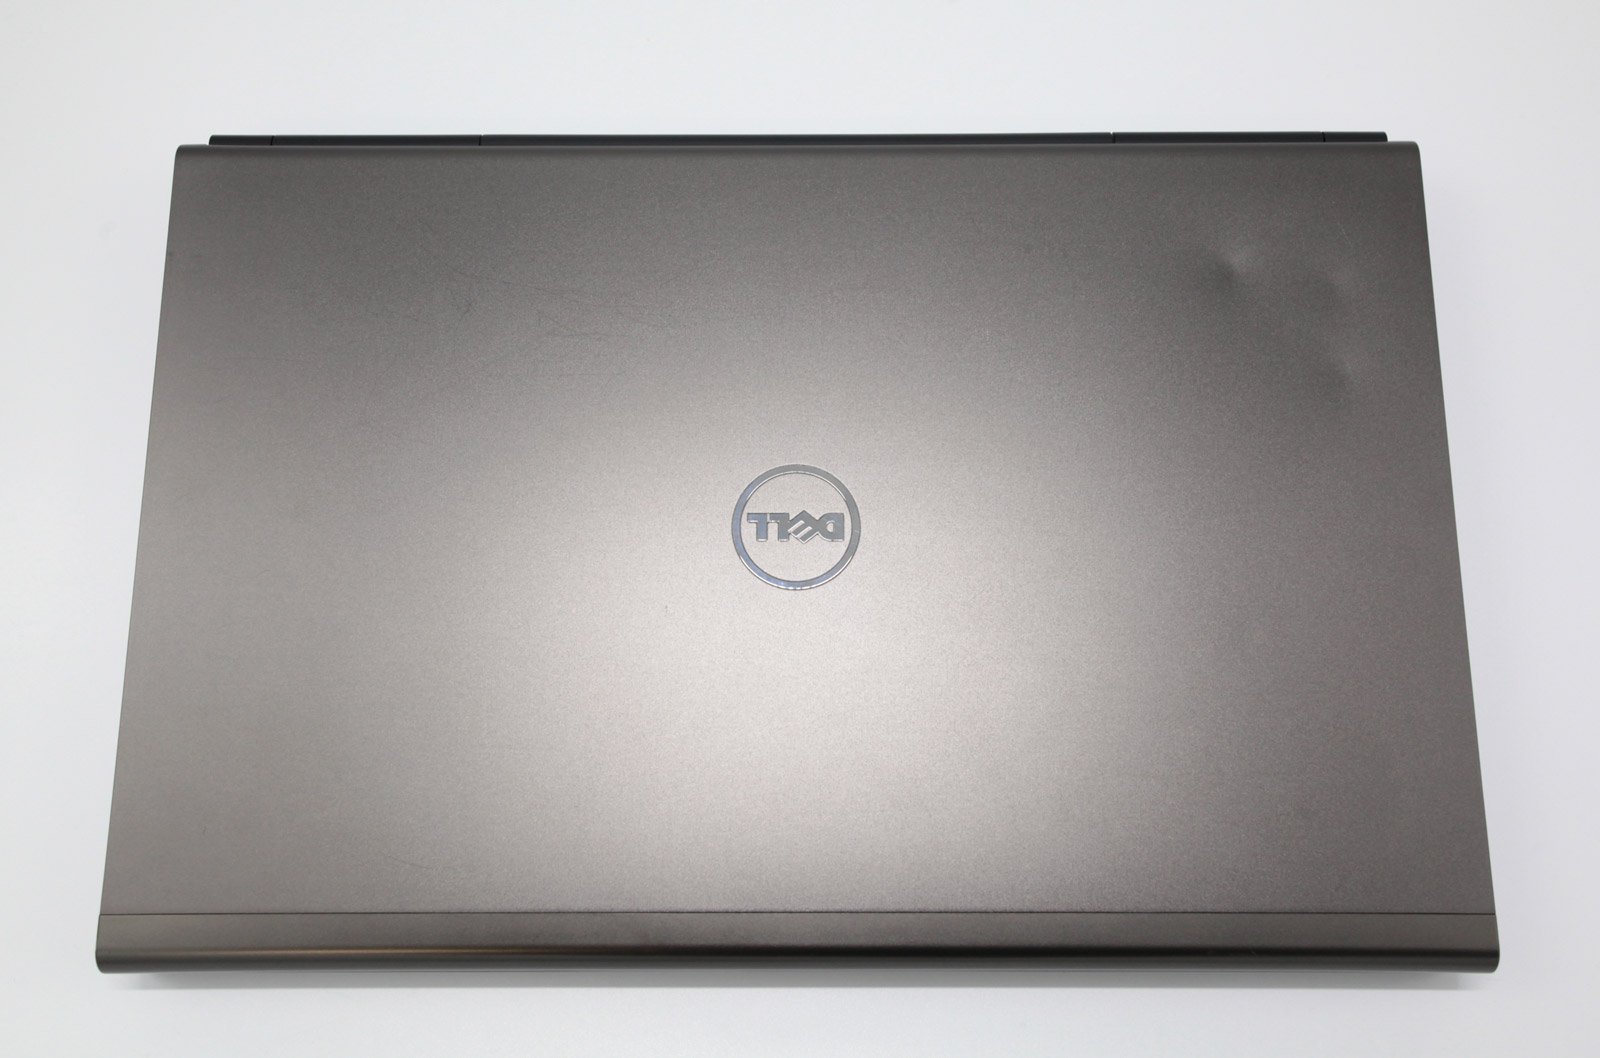 Dell Precision M6800 17" Laptop: Core i7 240GB+HDD 16GB RAM K4100M Warranty VAT - CruiseTech